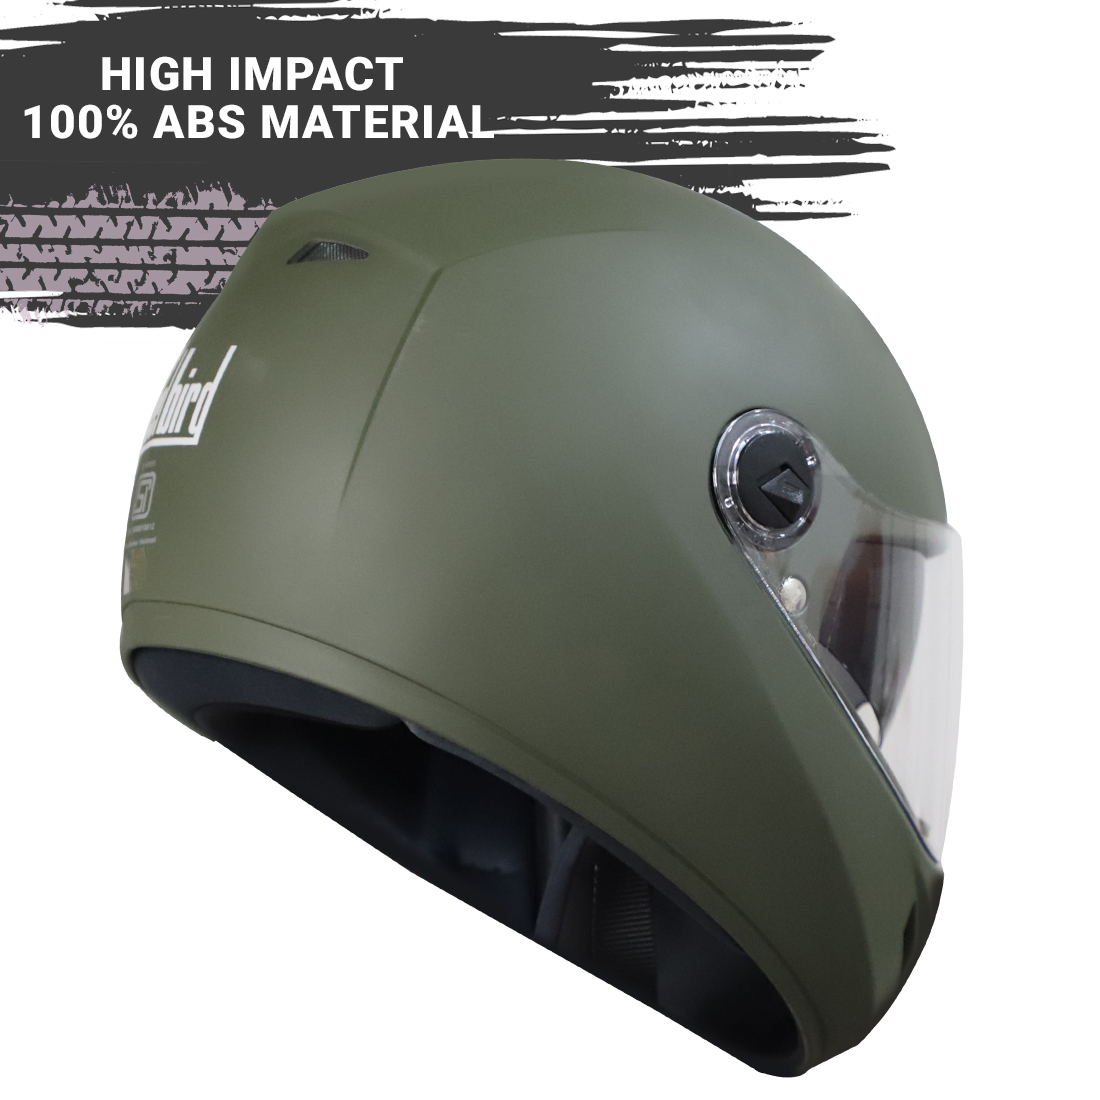 Steelbird SB-39 Cyborg ISI Certified Full Face Helmet For Men And Women With Sun Shield (Matt Battle Green)